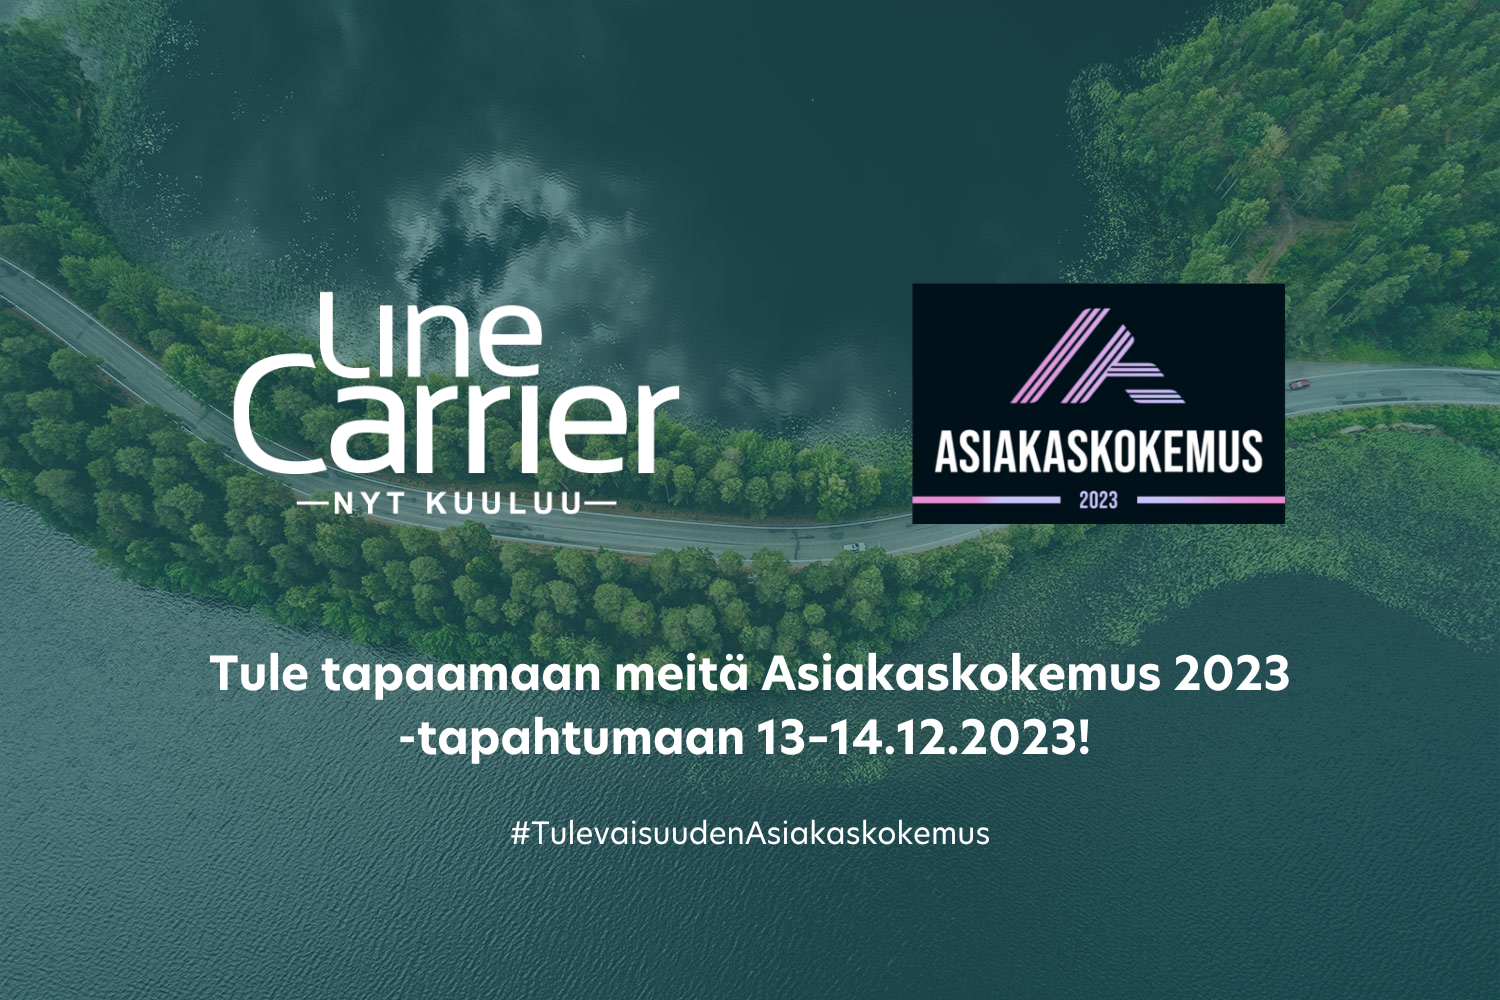 Line Carrier Mukana Asiakaskokemus 2023